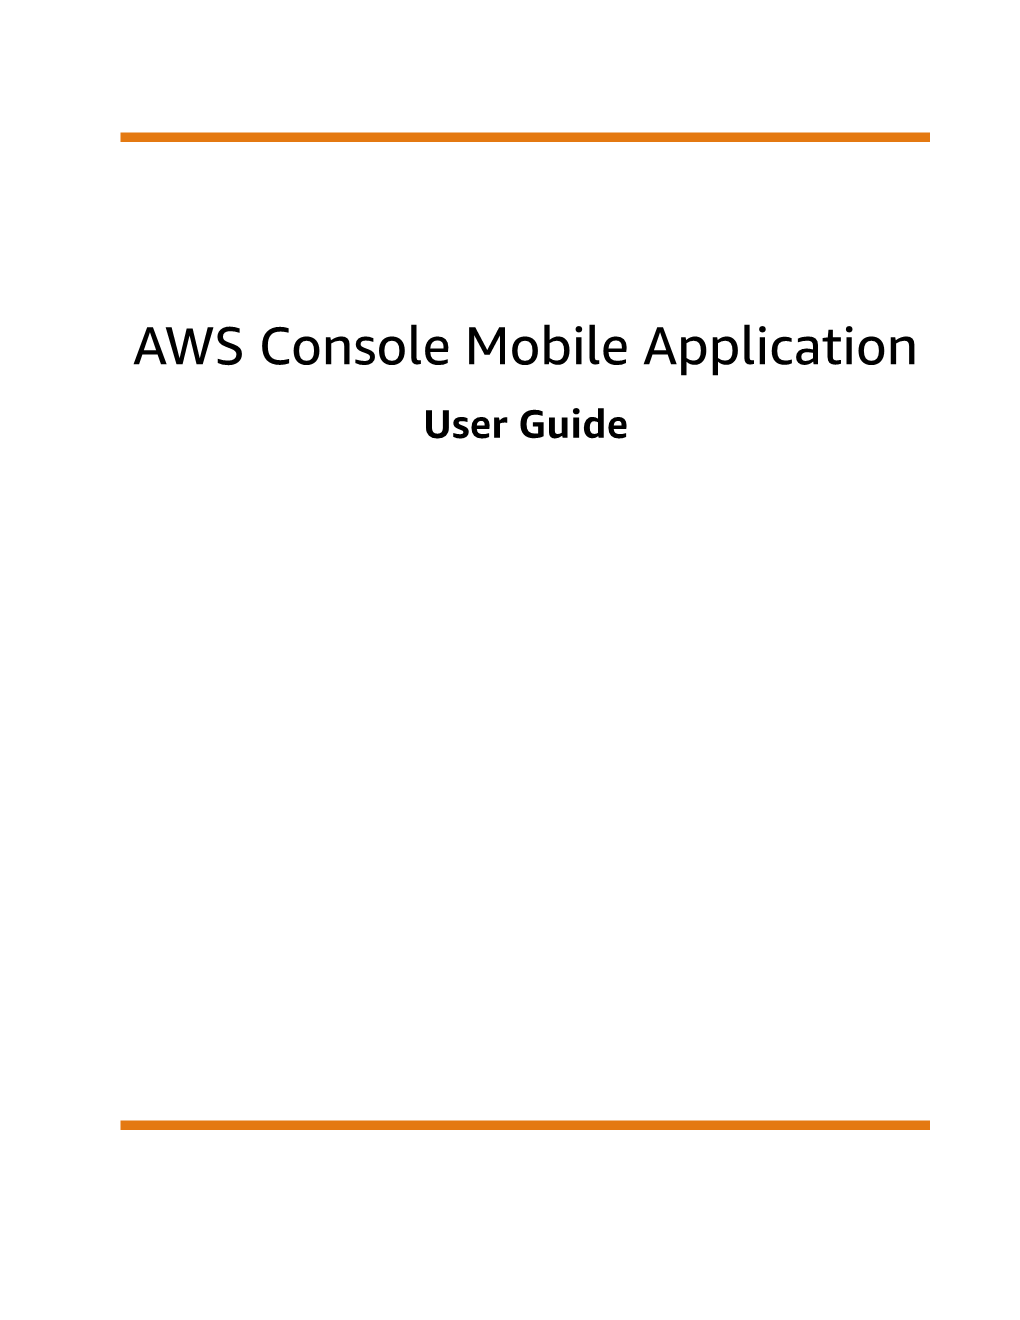 AWS Console Mobile Application User Guide AWS Console Mobile Application User Guide